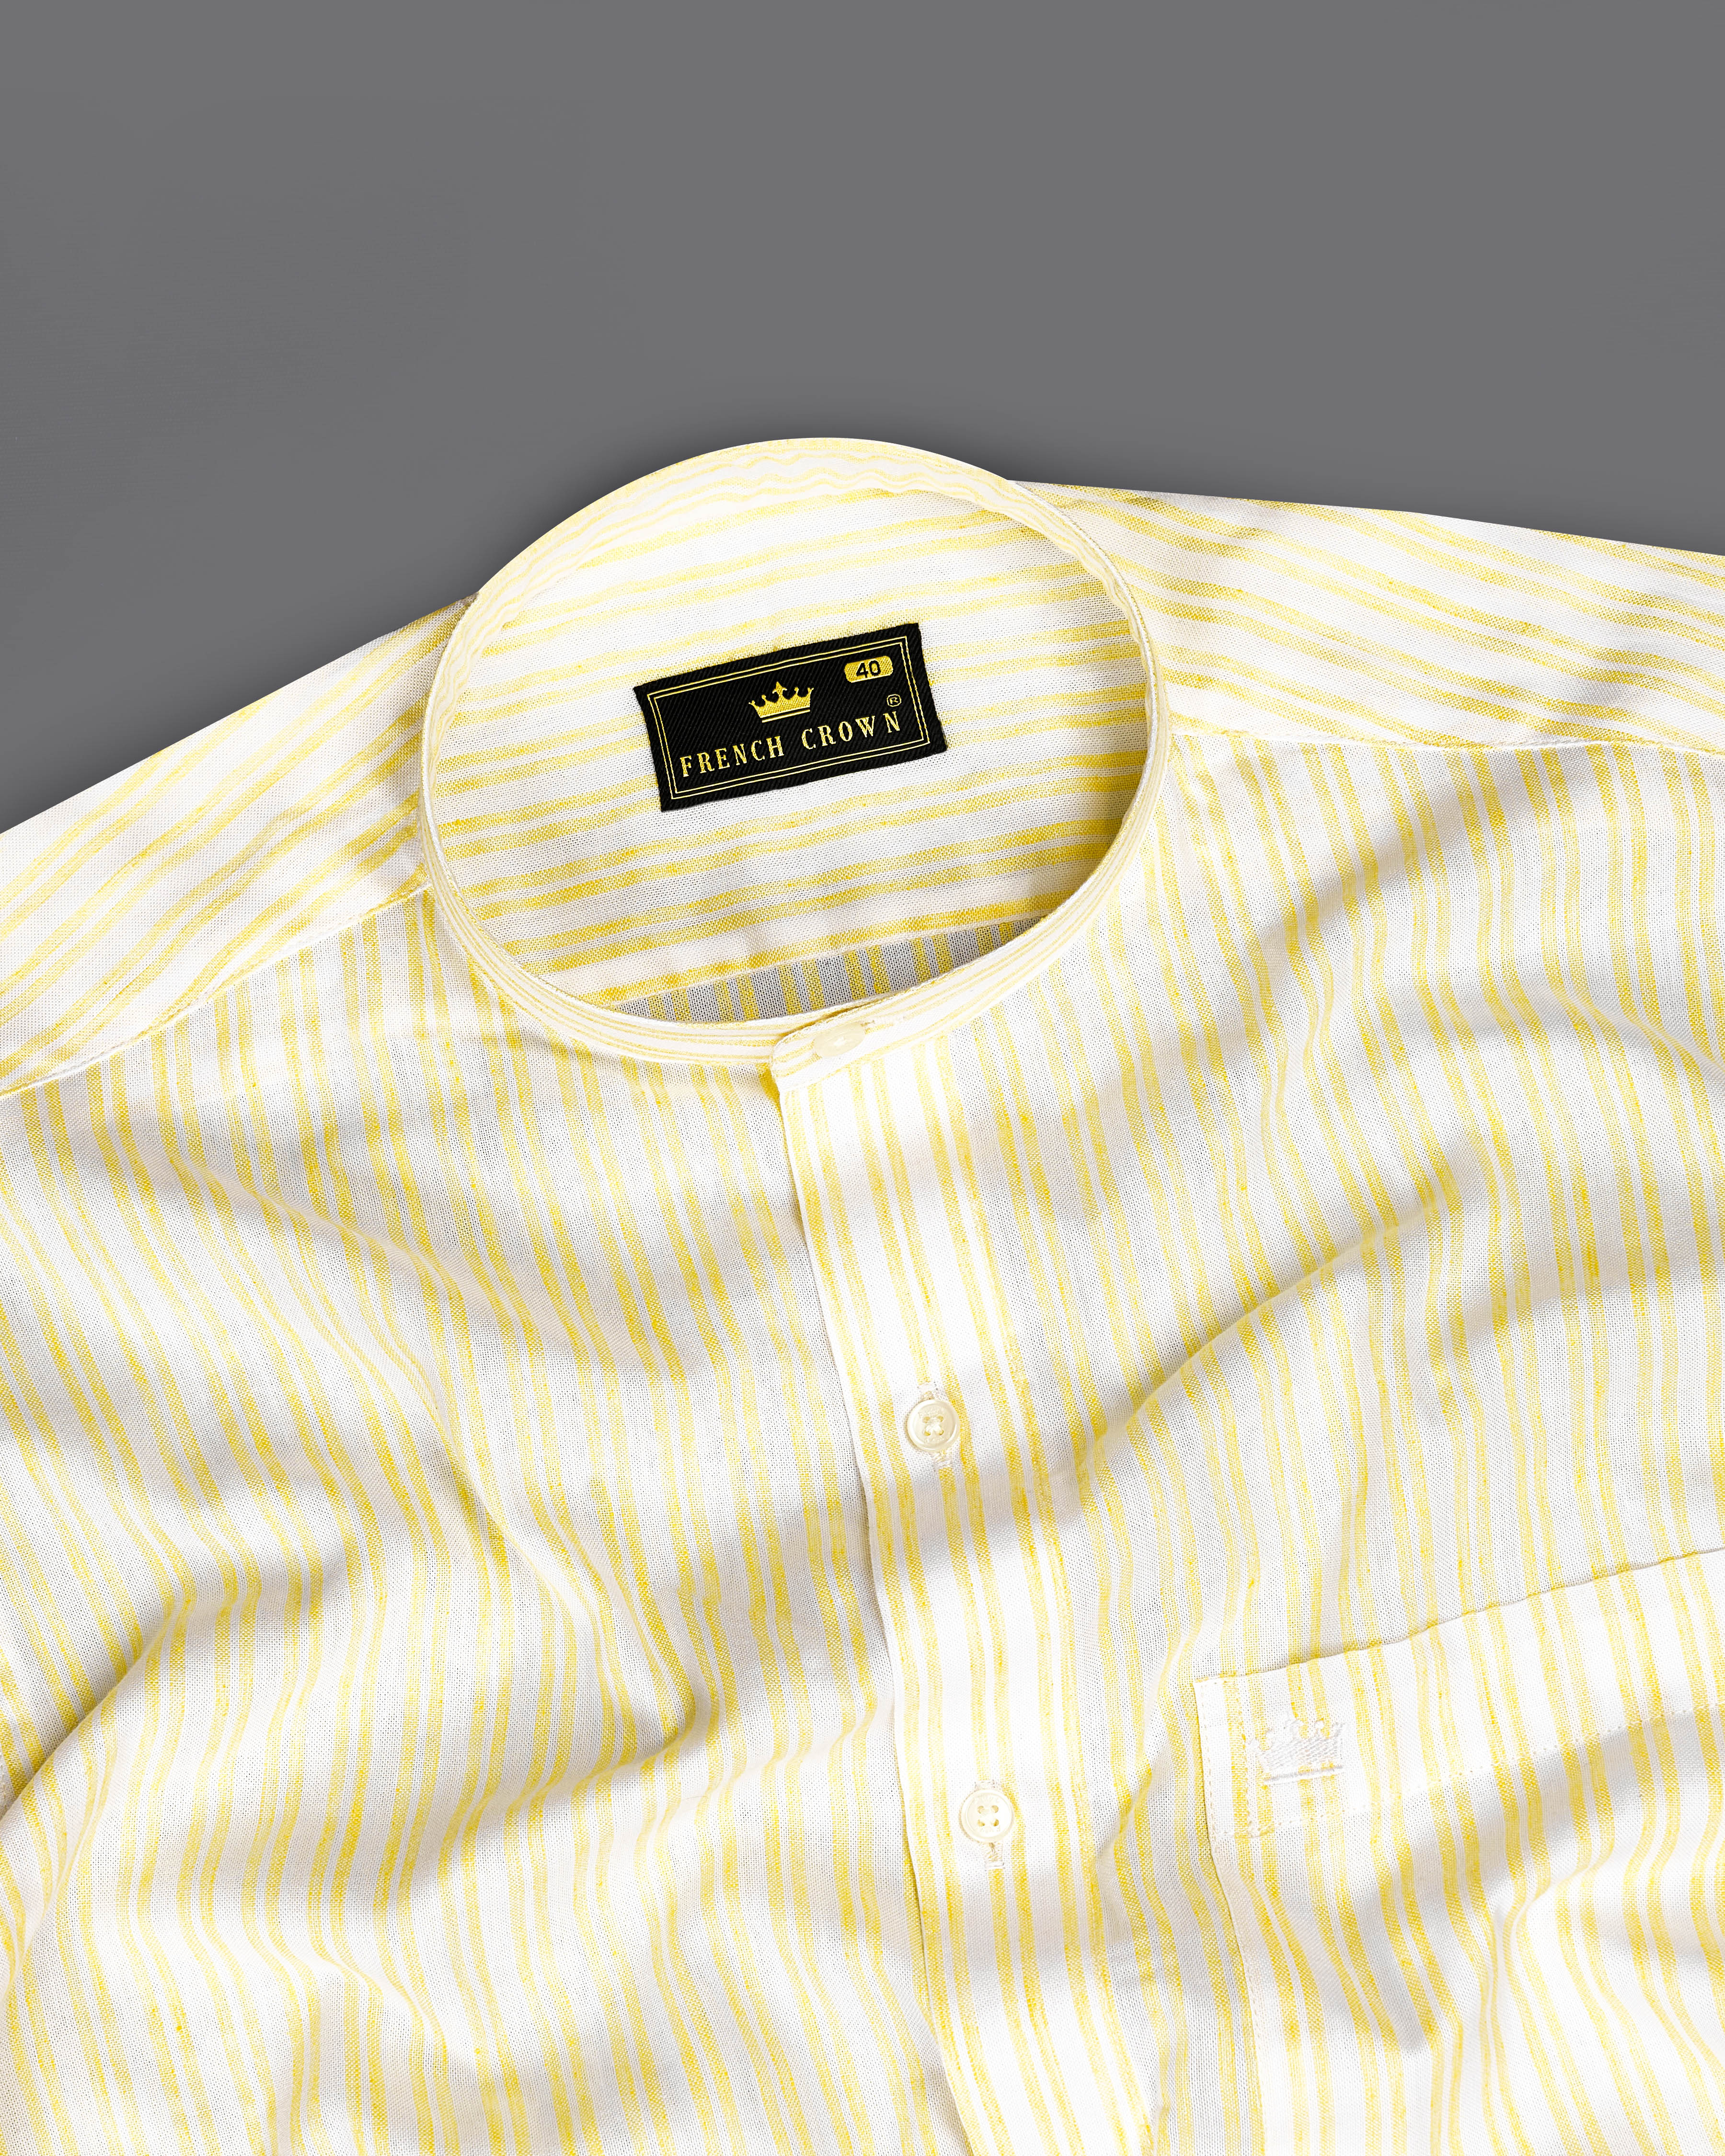 Portica Yellow and White Striped Premium Cotton Shirt